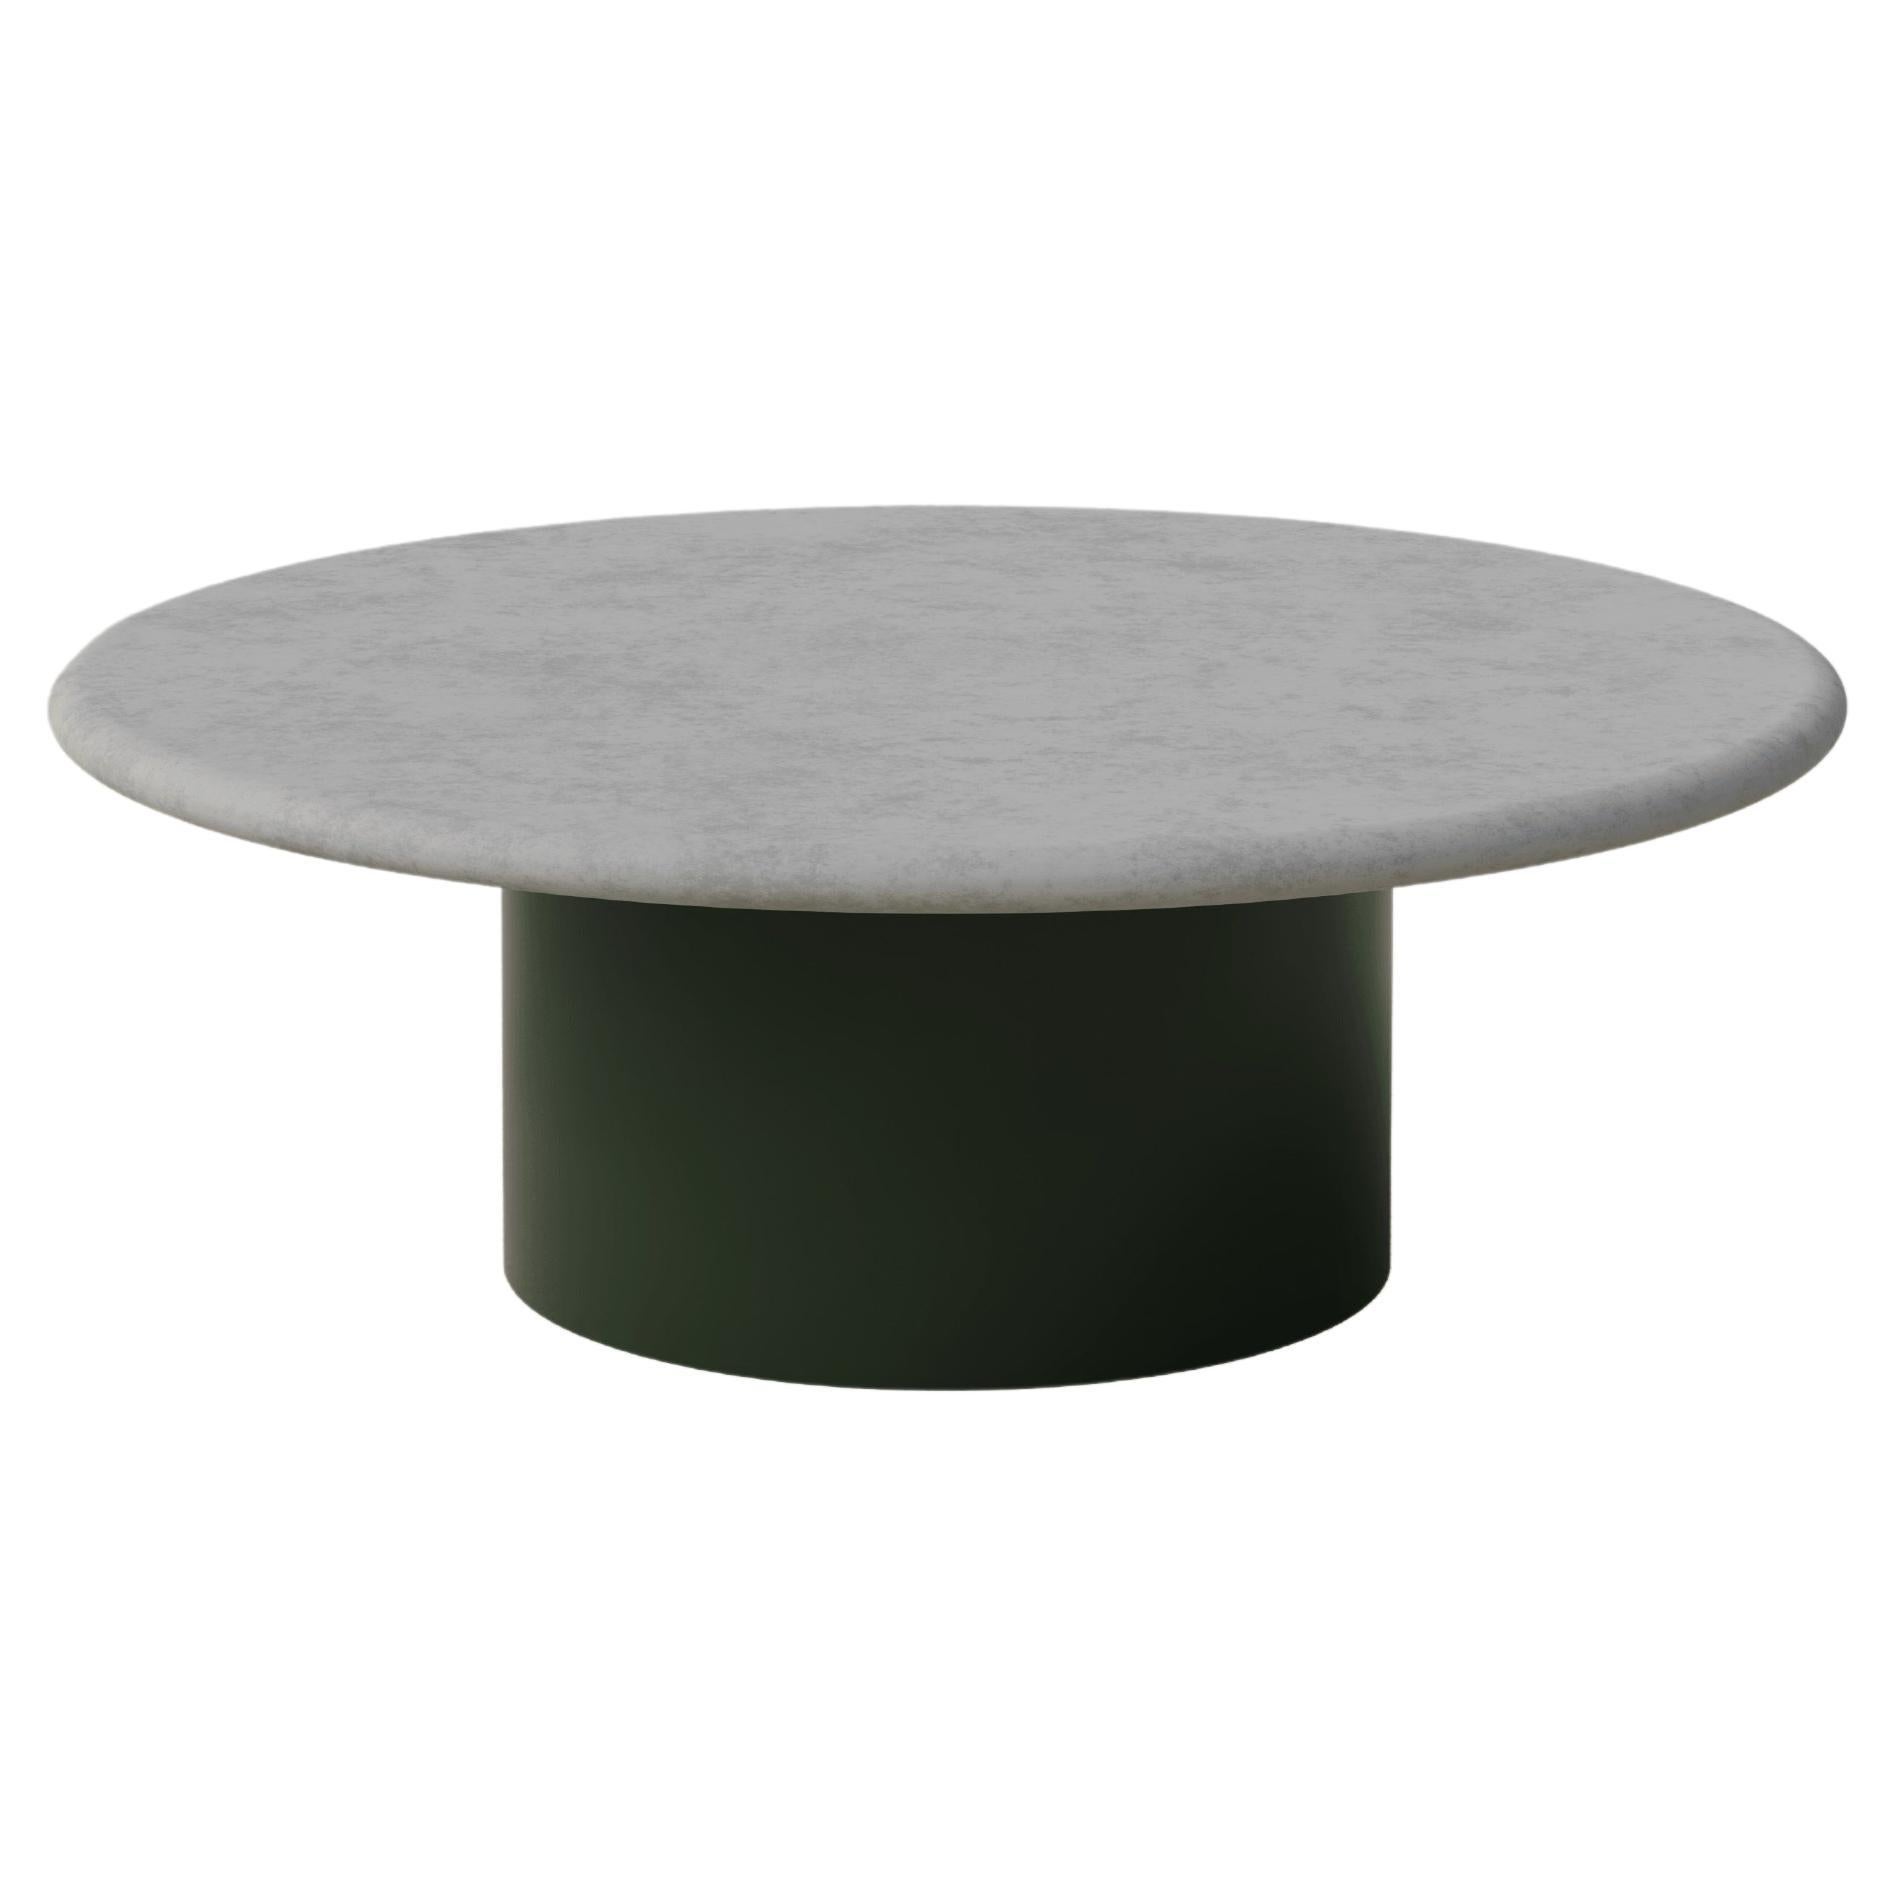 Raindrop Coffee Table, 800, Microcrete / Moss Green